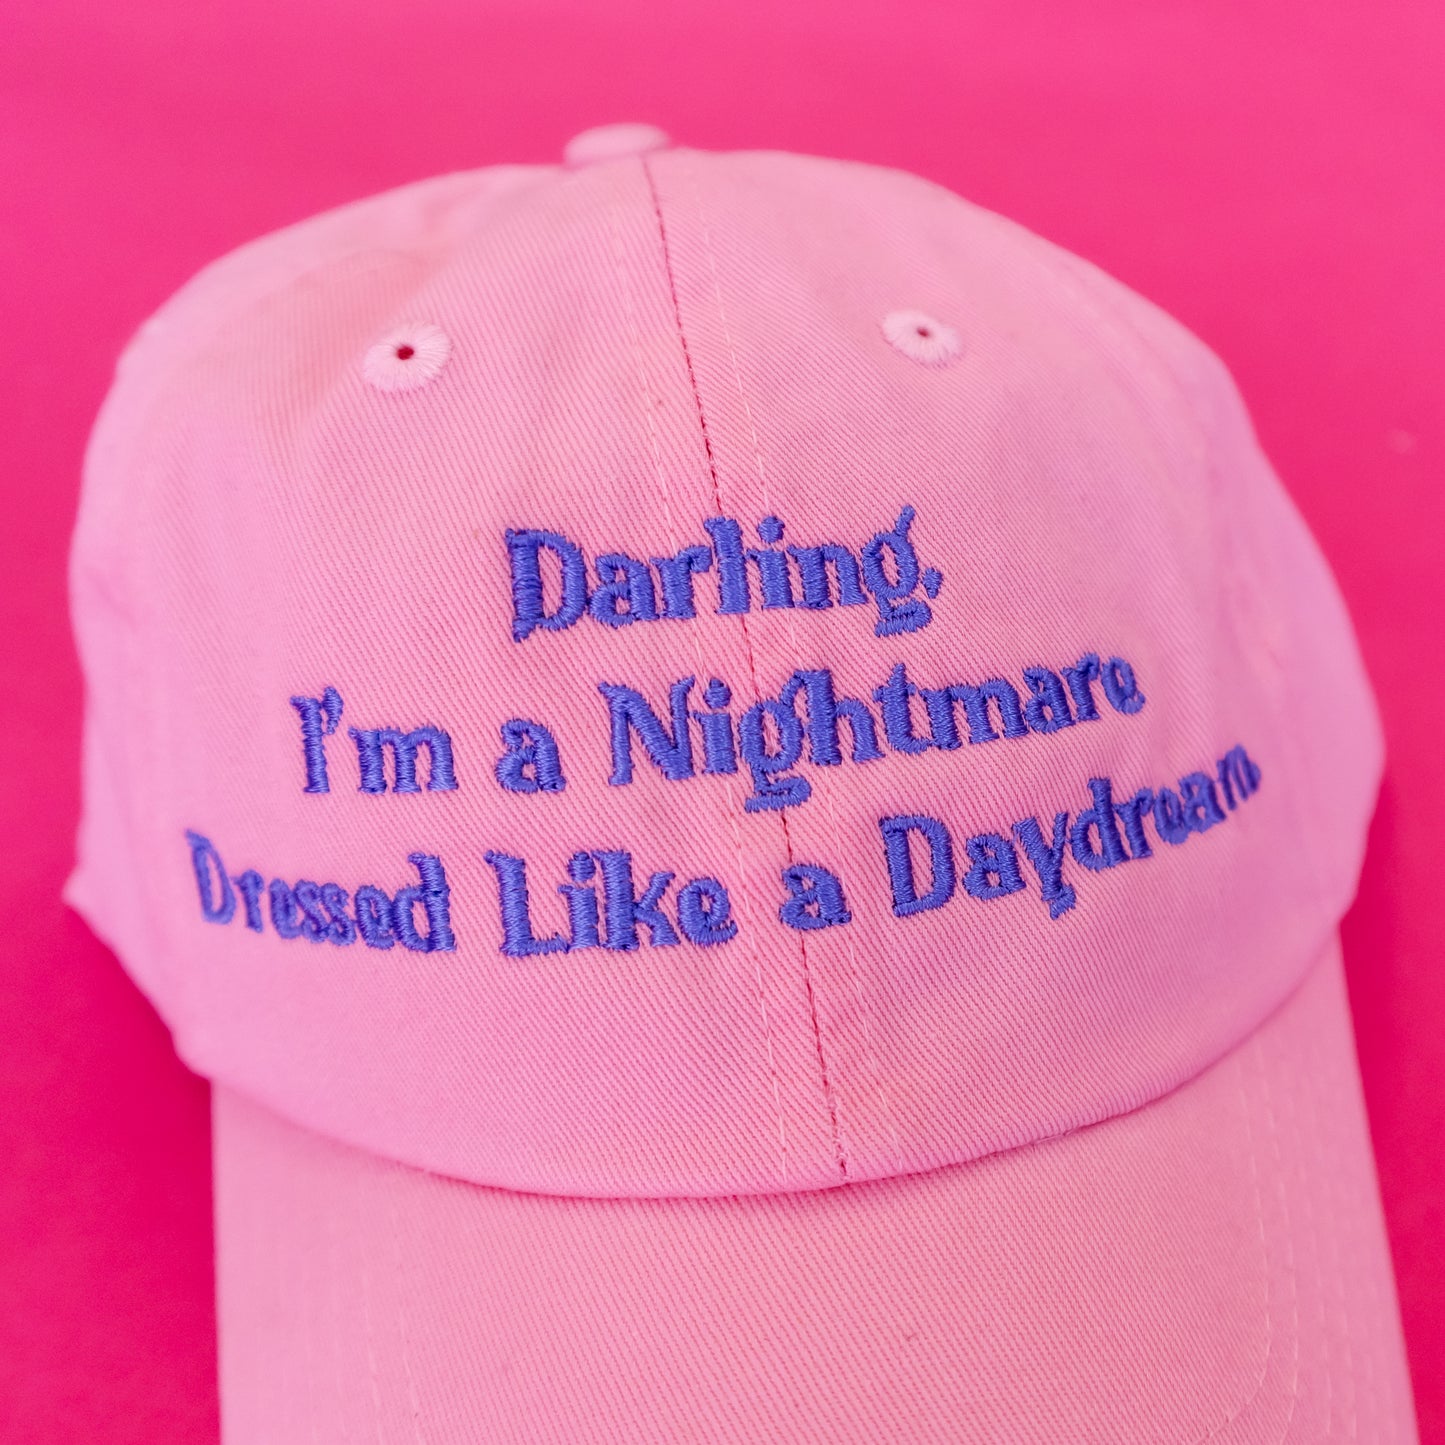 Darling I’m a Nightmare Baseball Cap | Gasp